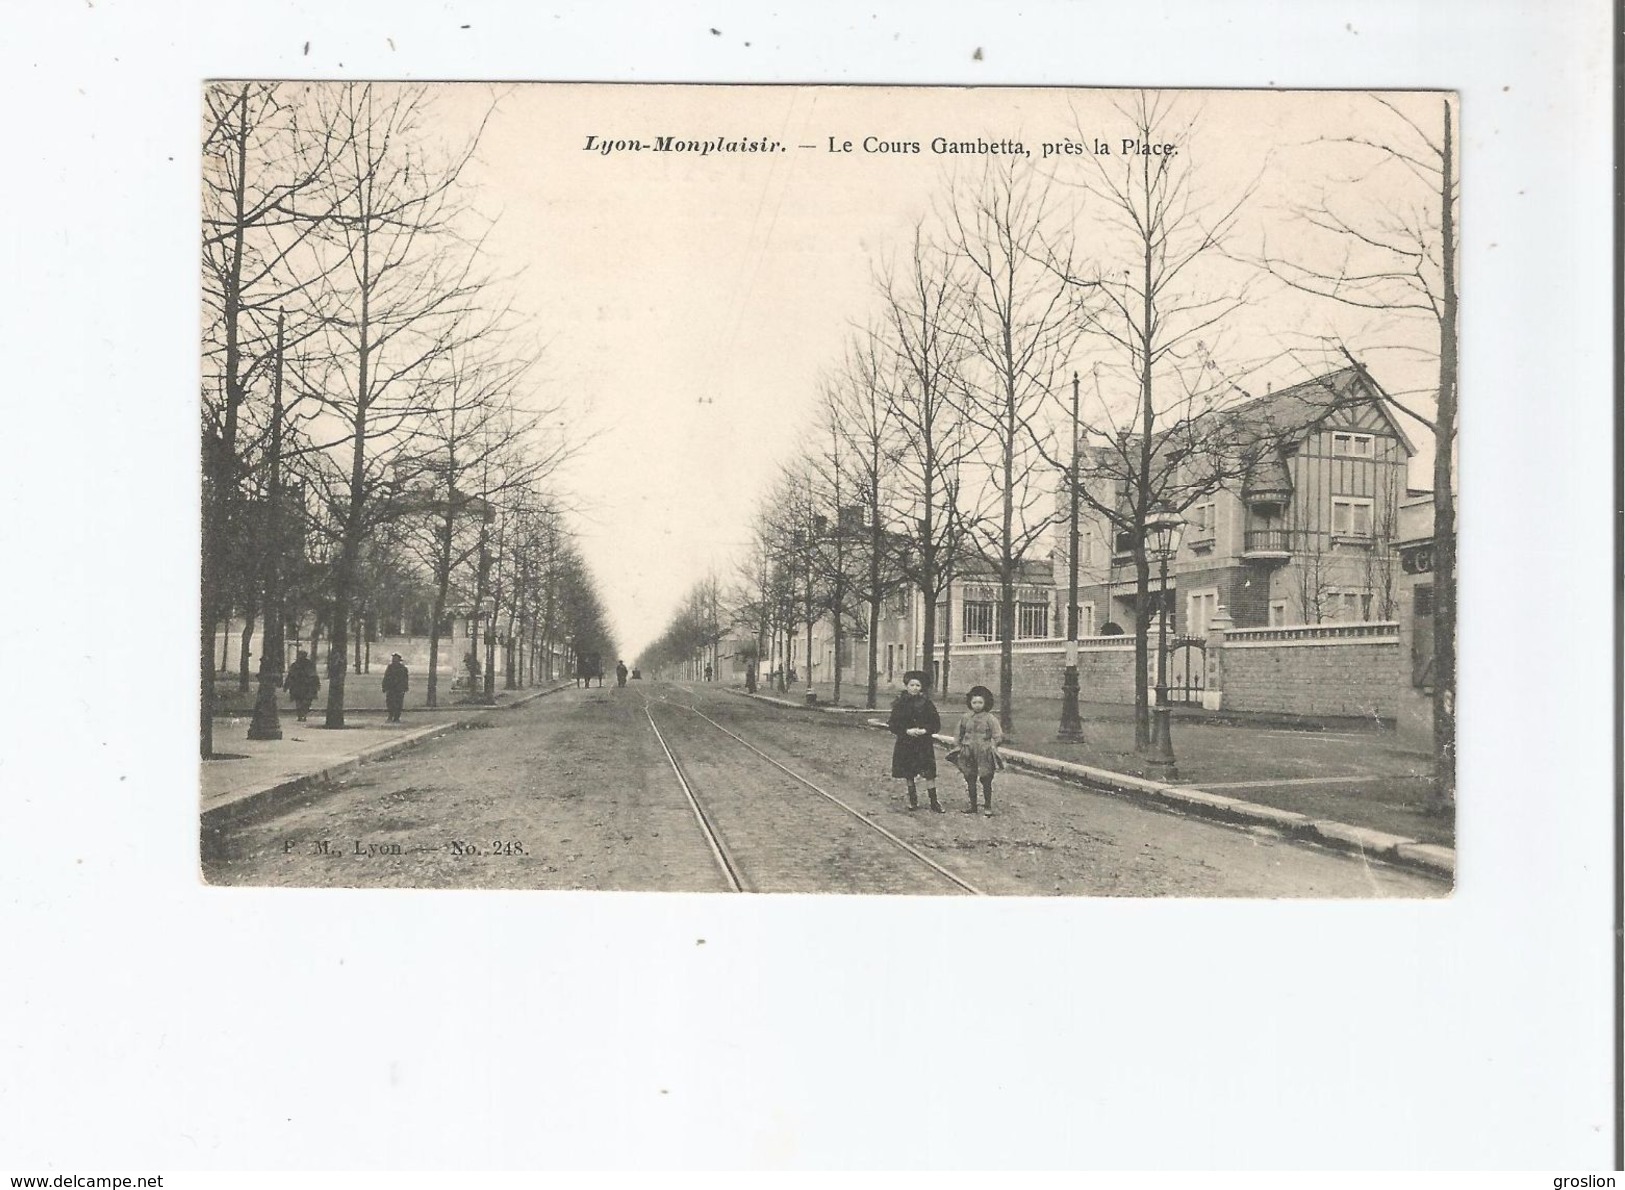 LYON MONPLAISIR 248 LE COURS GAMBETTA PRES DE LA PLACE 1904 - Lyon 8